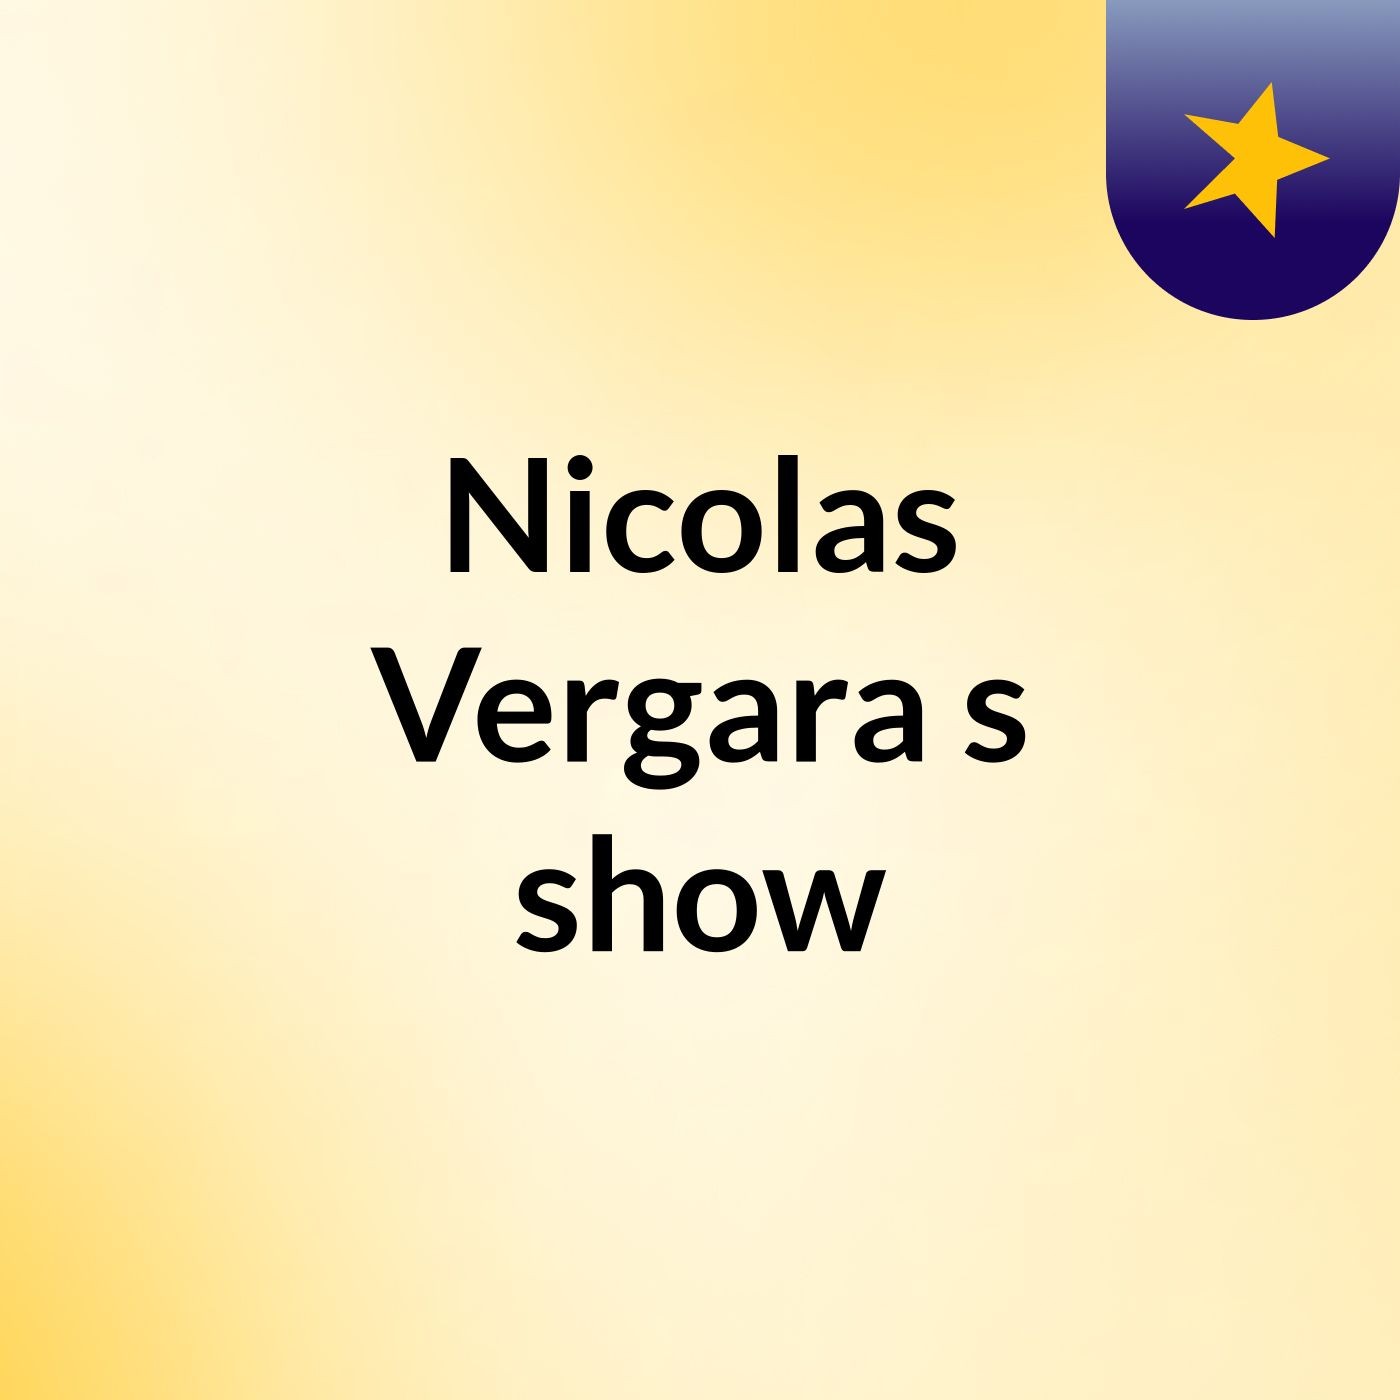 Nicolas Vergara's show